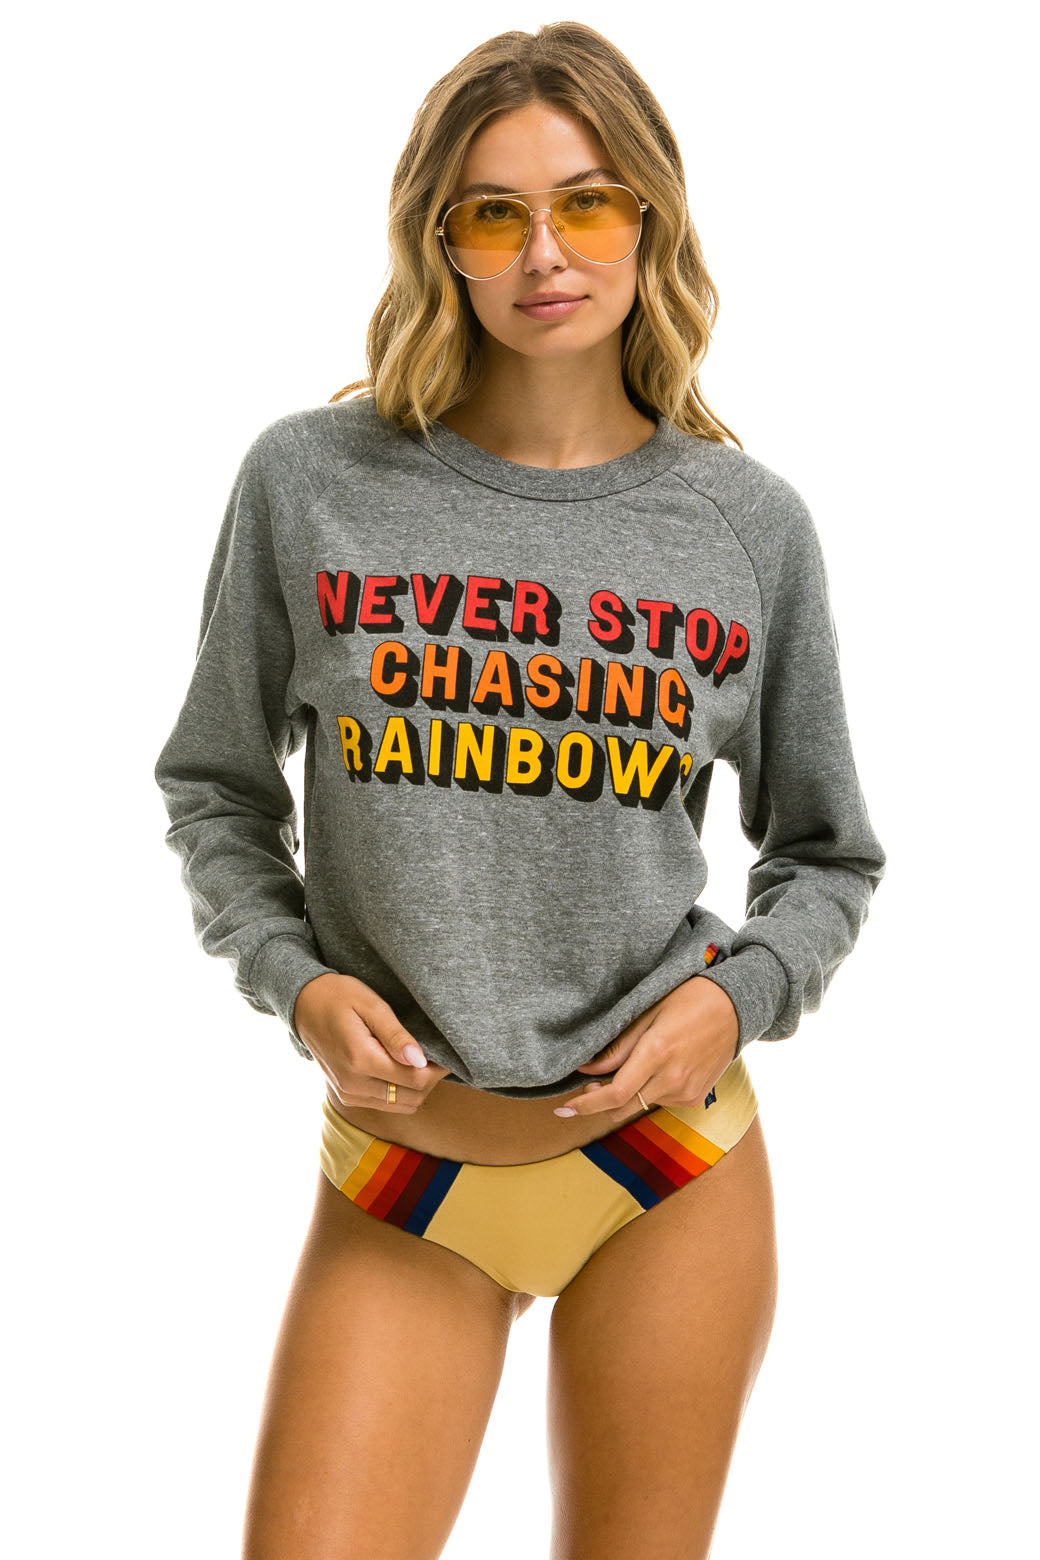 NEVER STOP CHASING RAINBOWS CREW SWEATSHIRT - HEATHER GREY Sweatshirt Aviator Nation 